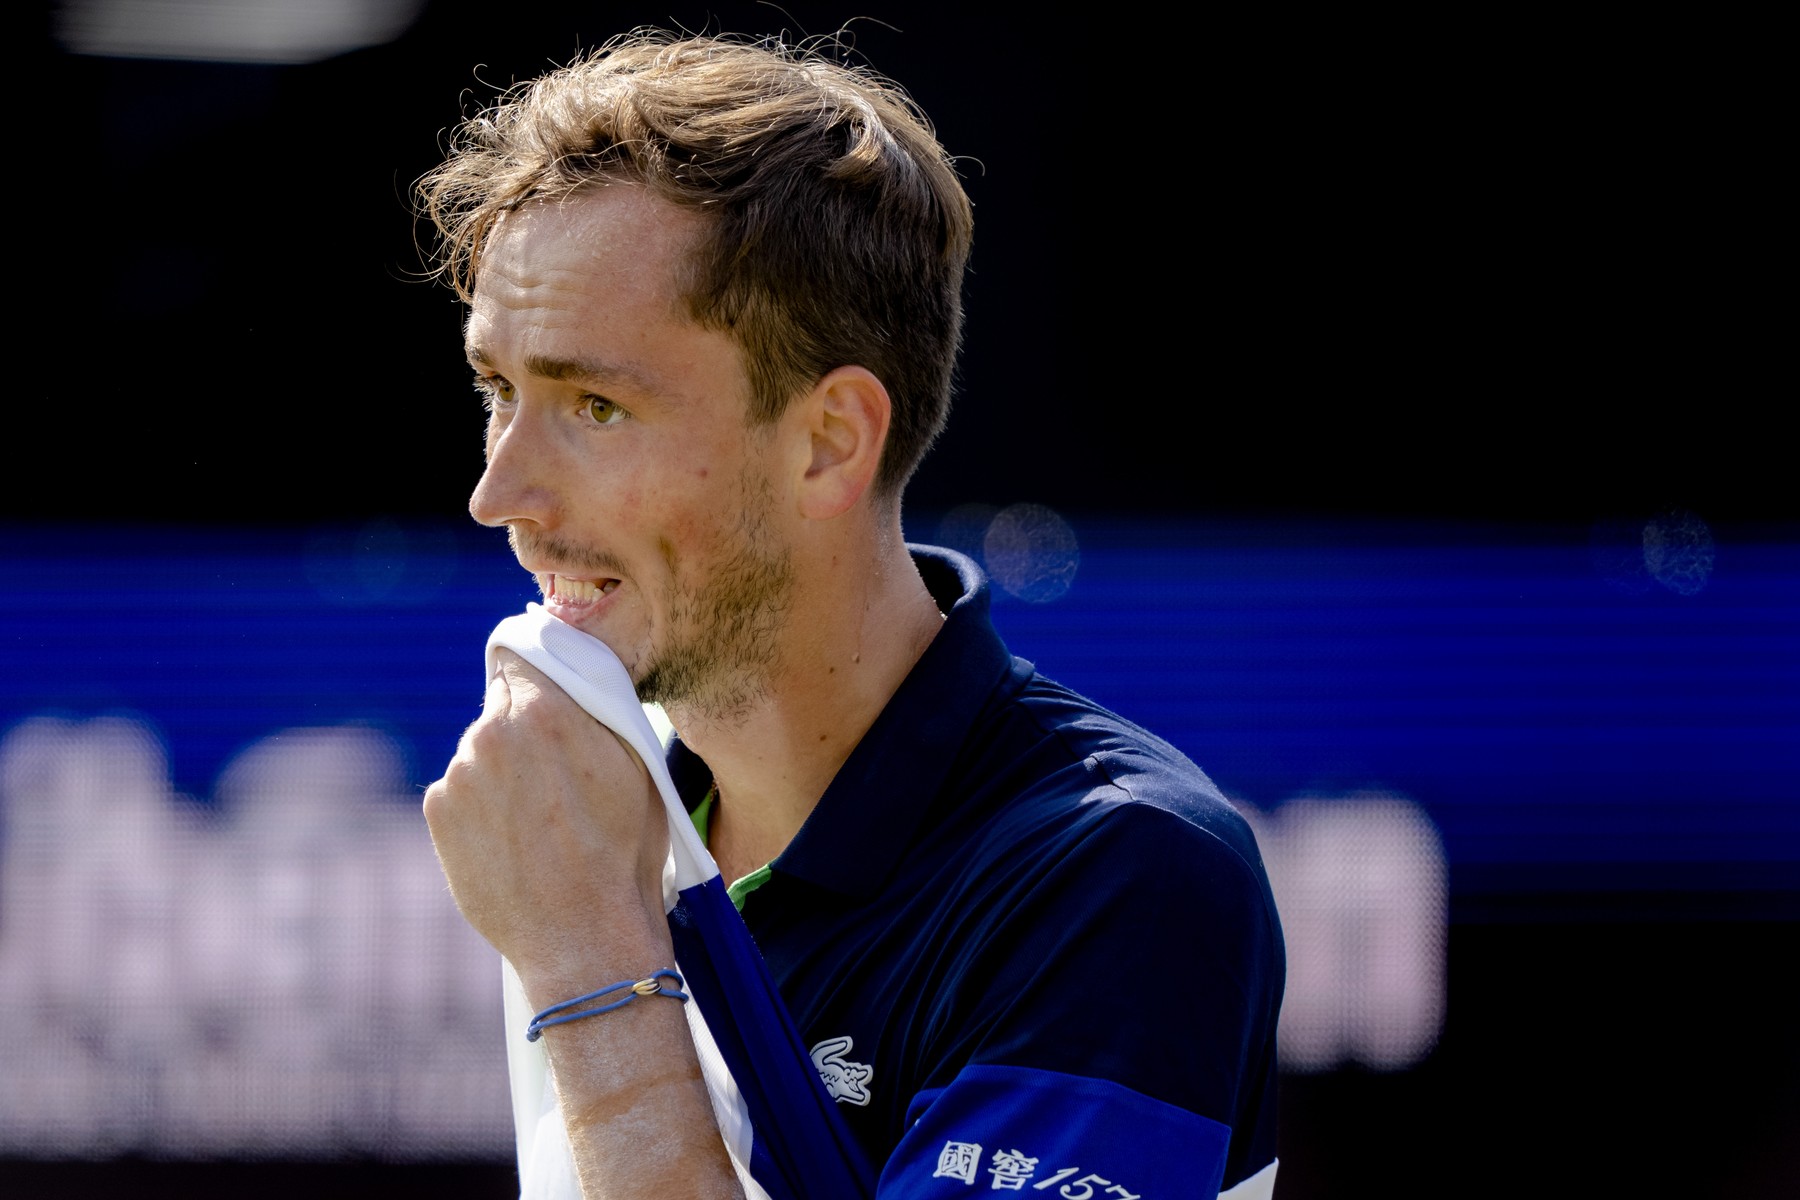 Noul lider mondial ATP, Daniil Medvedev, umilit în finala de la s-Hertogenbosch. “M-ai distrus”